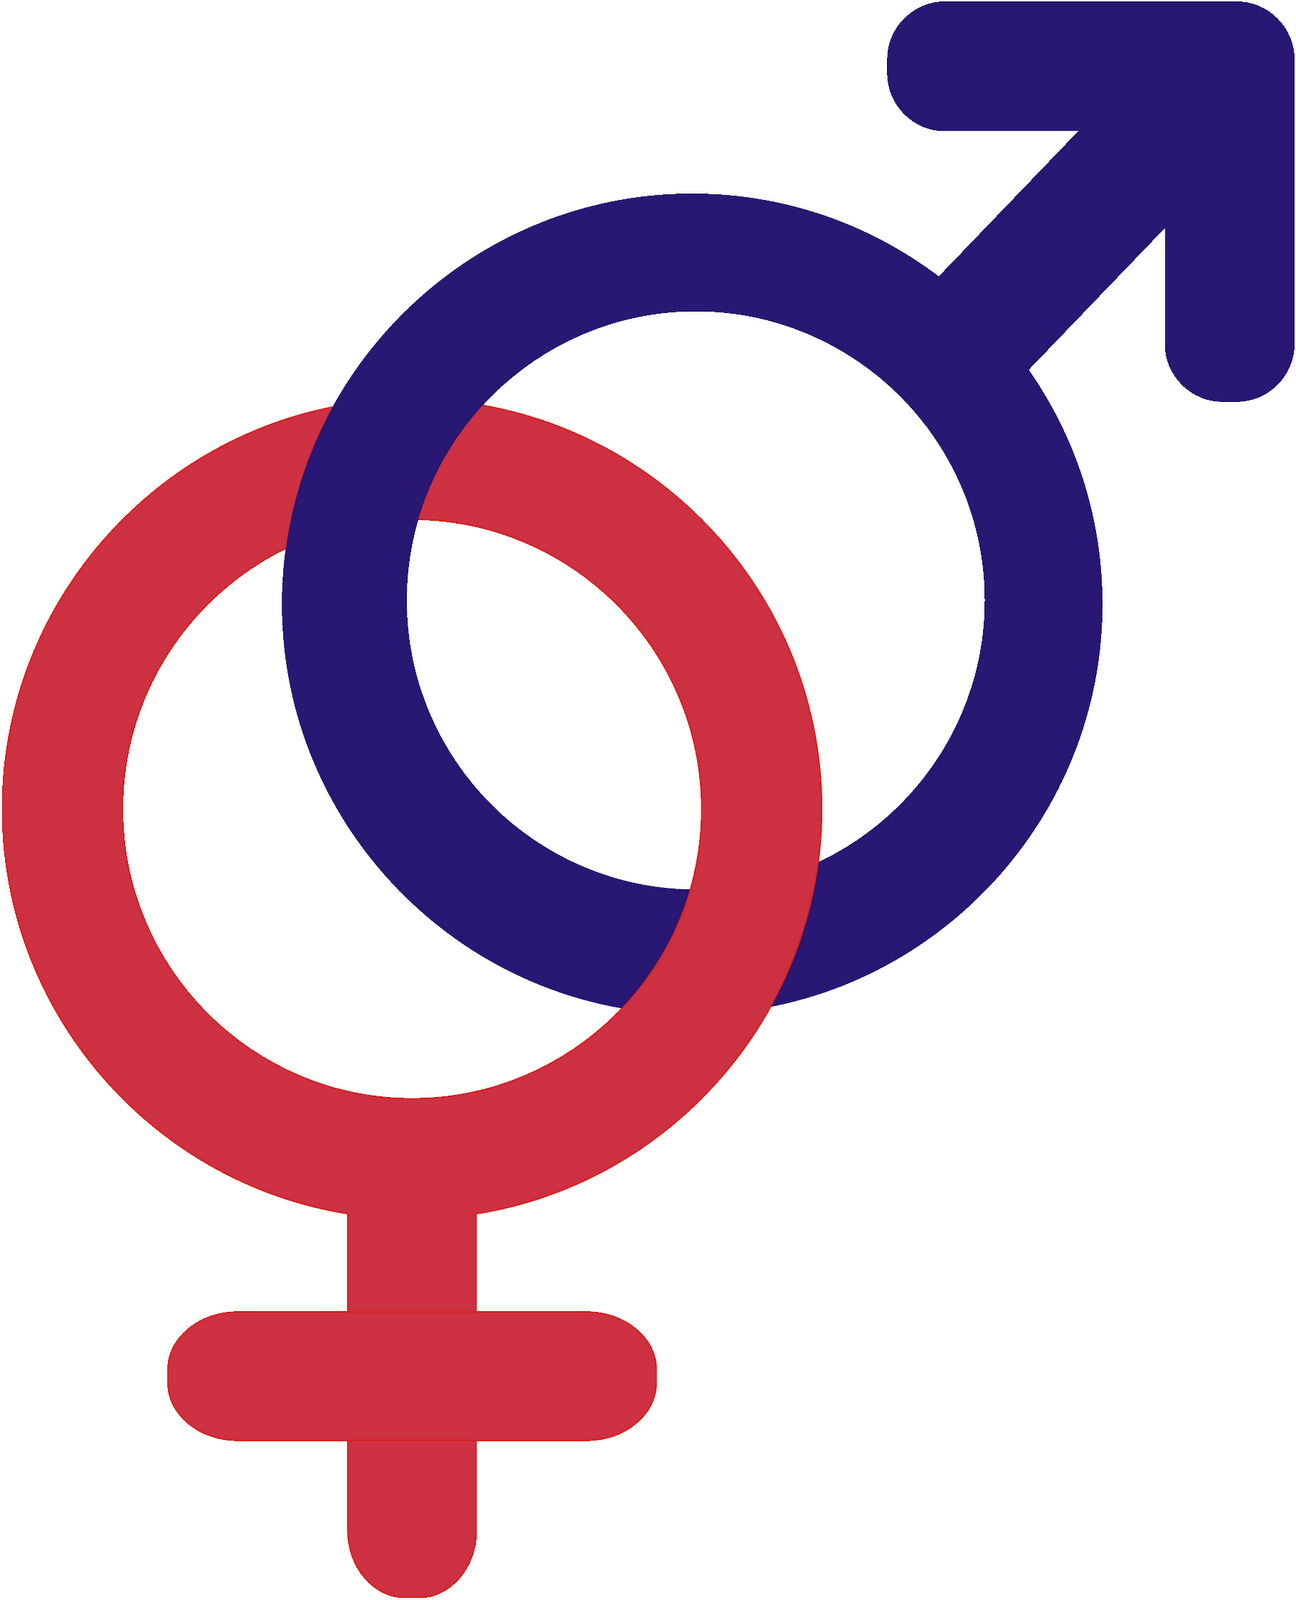 Sustainable Development Goal 5: Gender Equality (CanopyLAB) | MOOC List